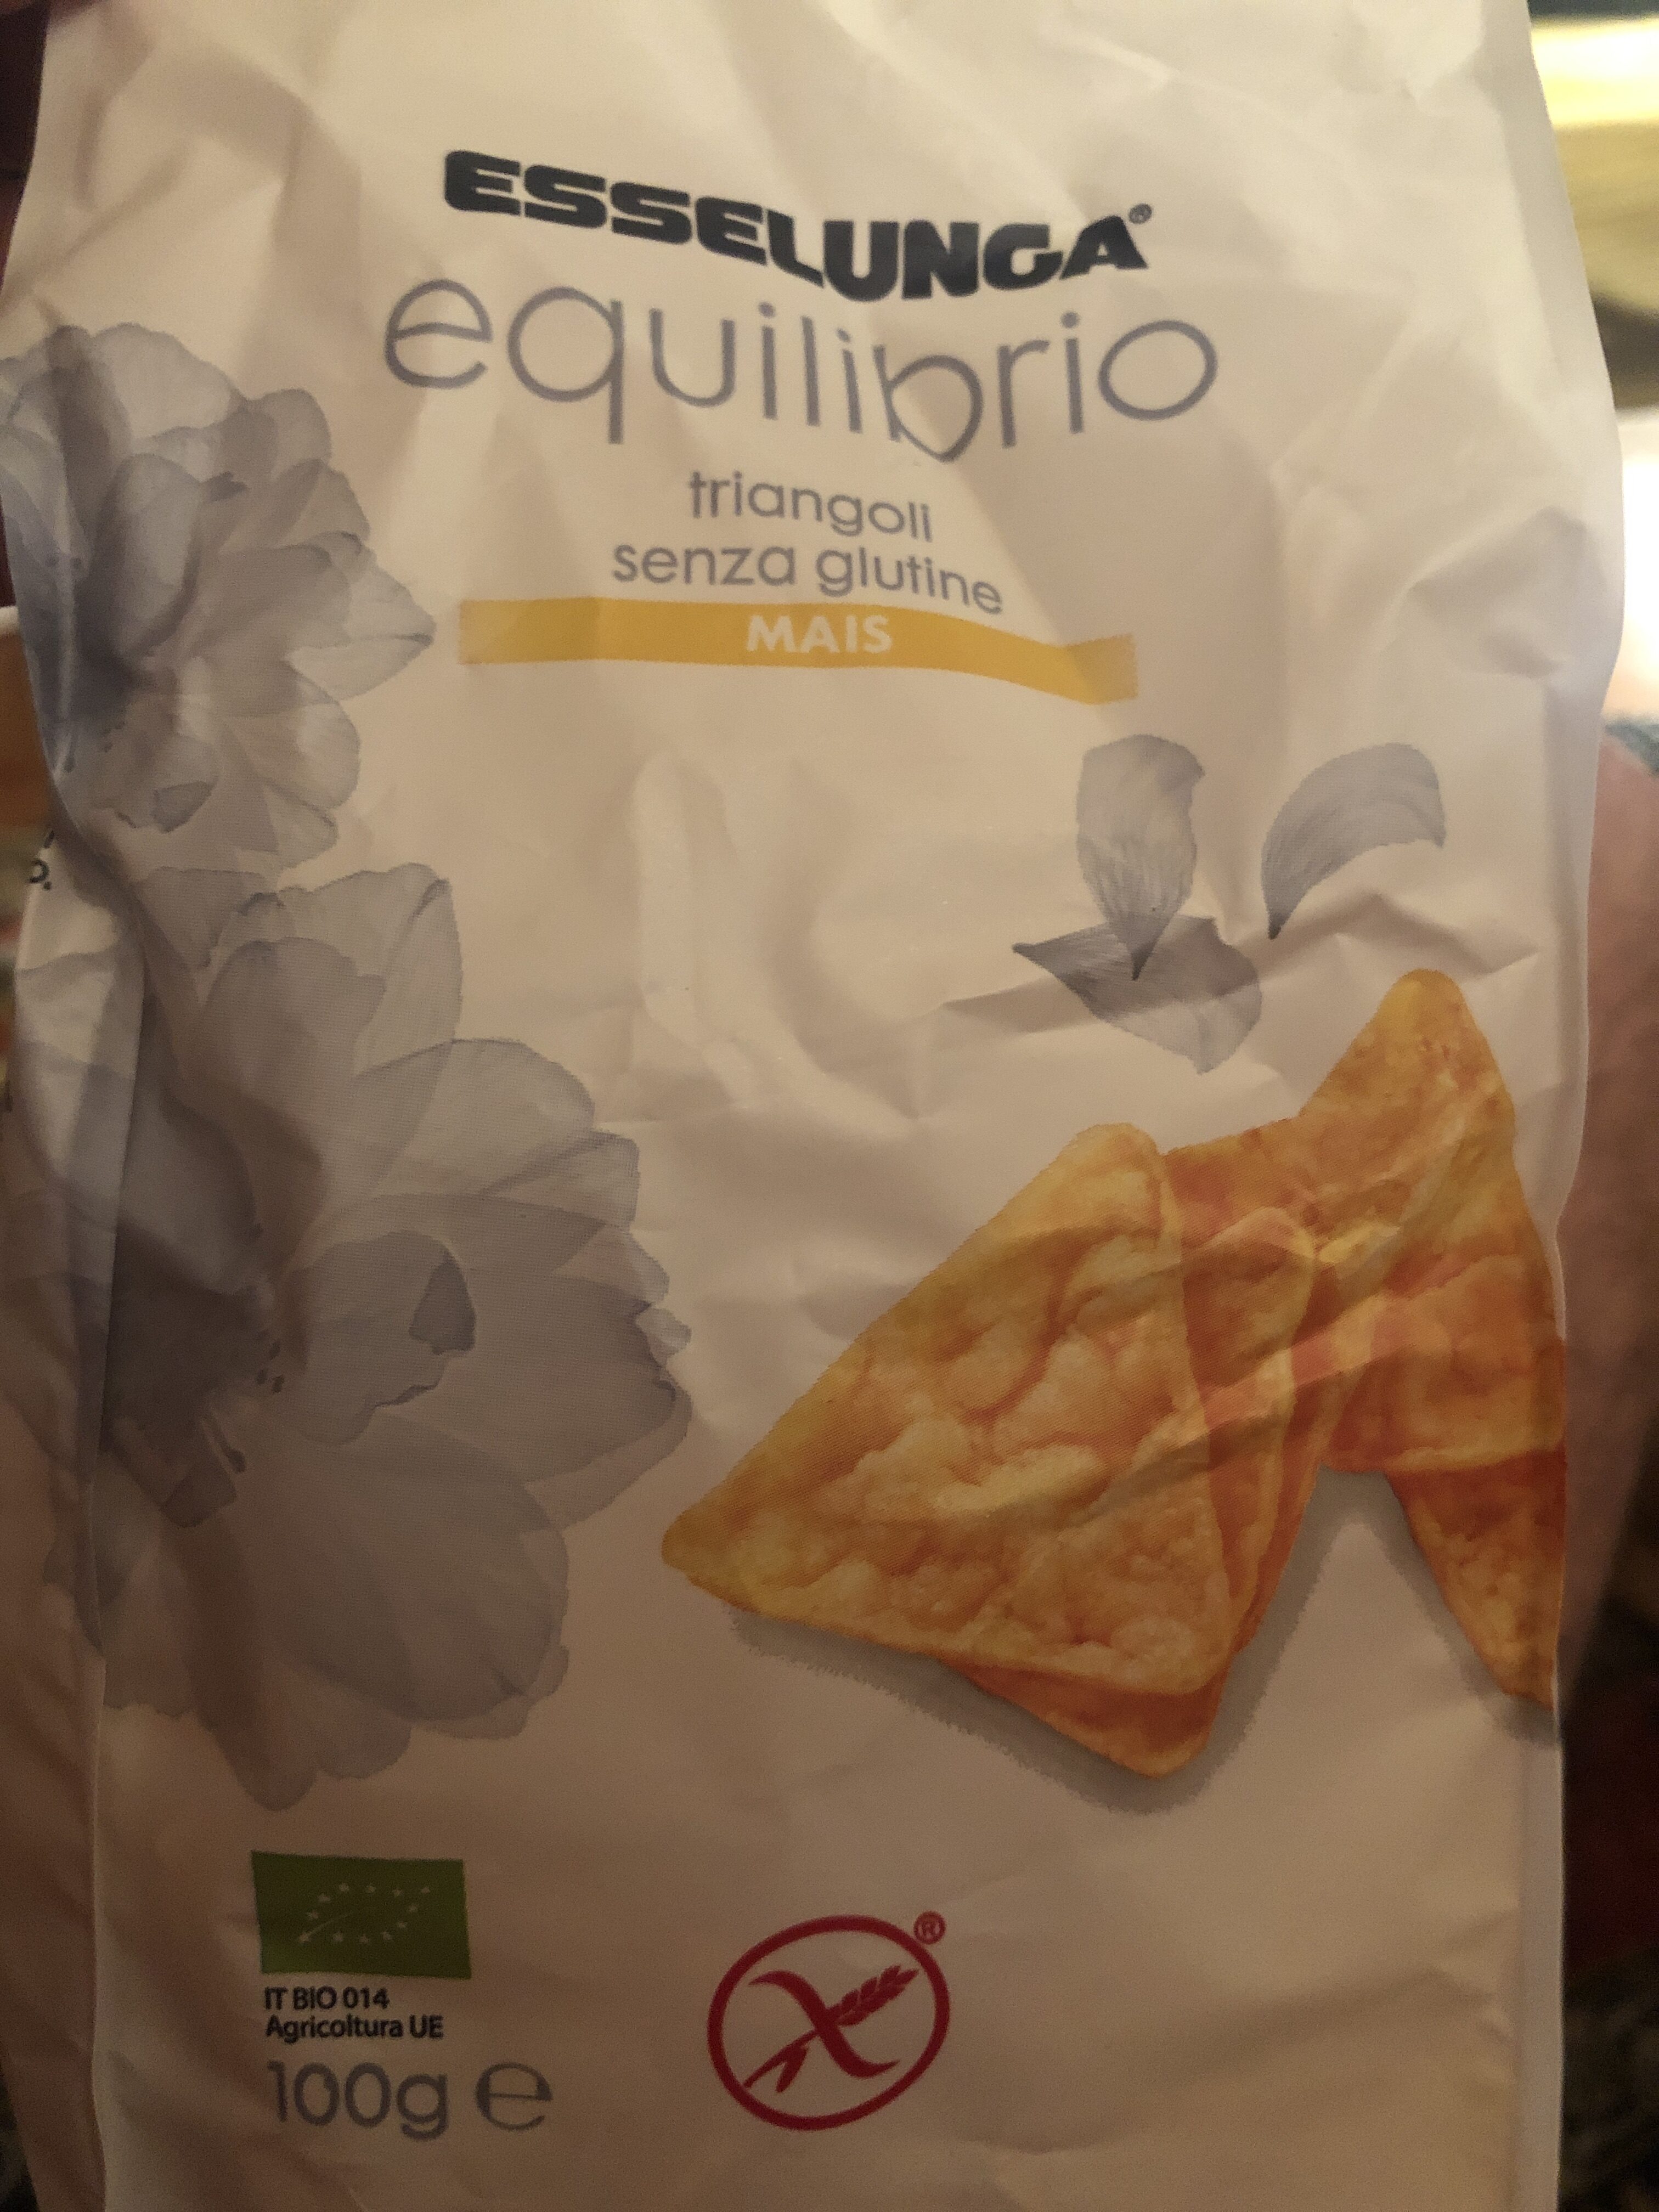 Triangolo senza glutine mais equilibrio Esselunga - Producto - it